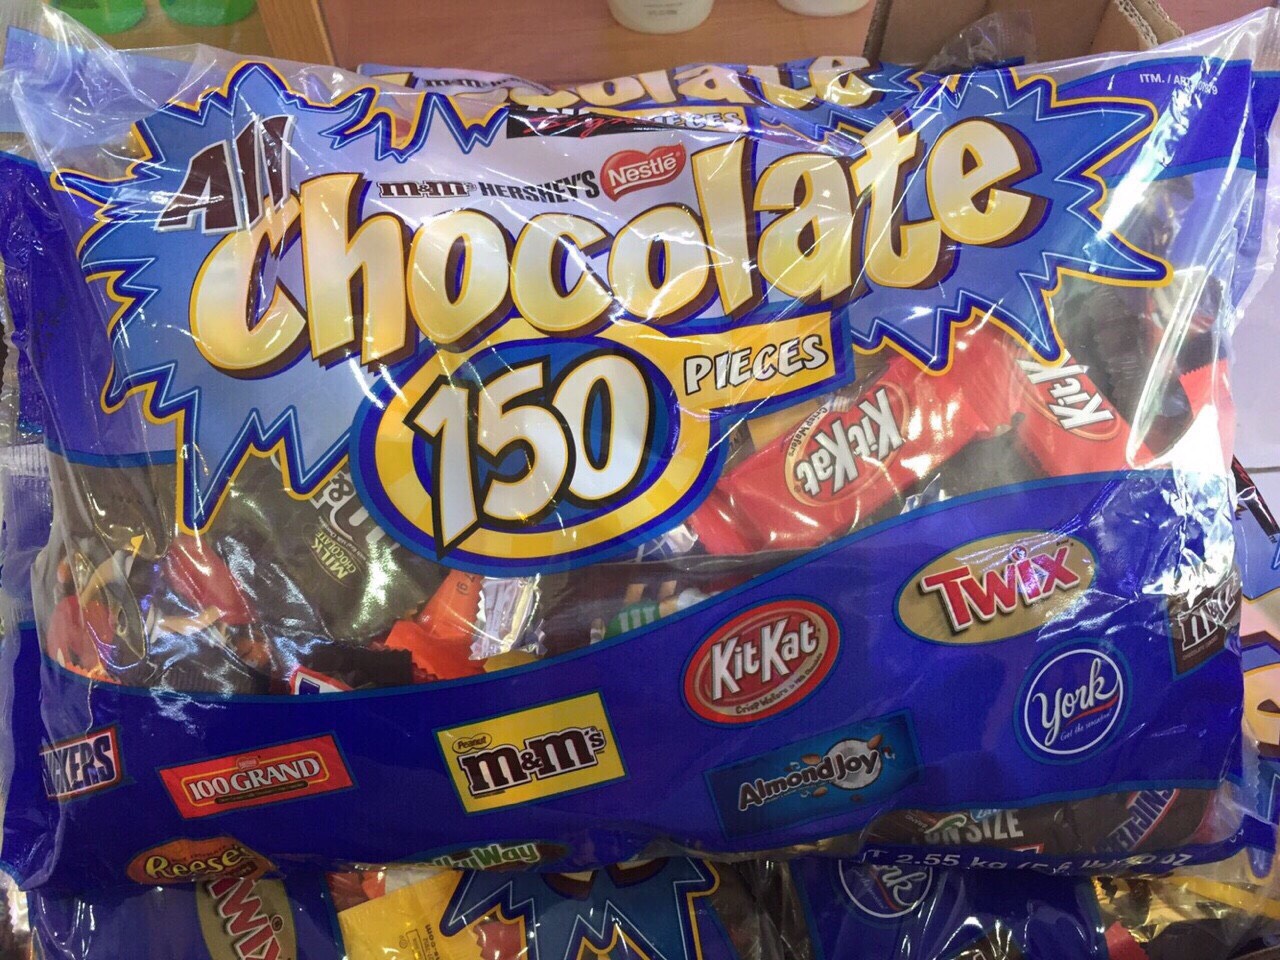 Kẹo Socola Tổng Hợp All Chocolate 150 Piecs 2.55kg Của Mỹ - Date 2/21